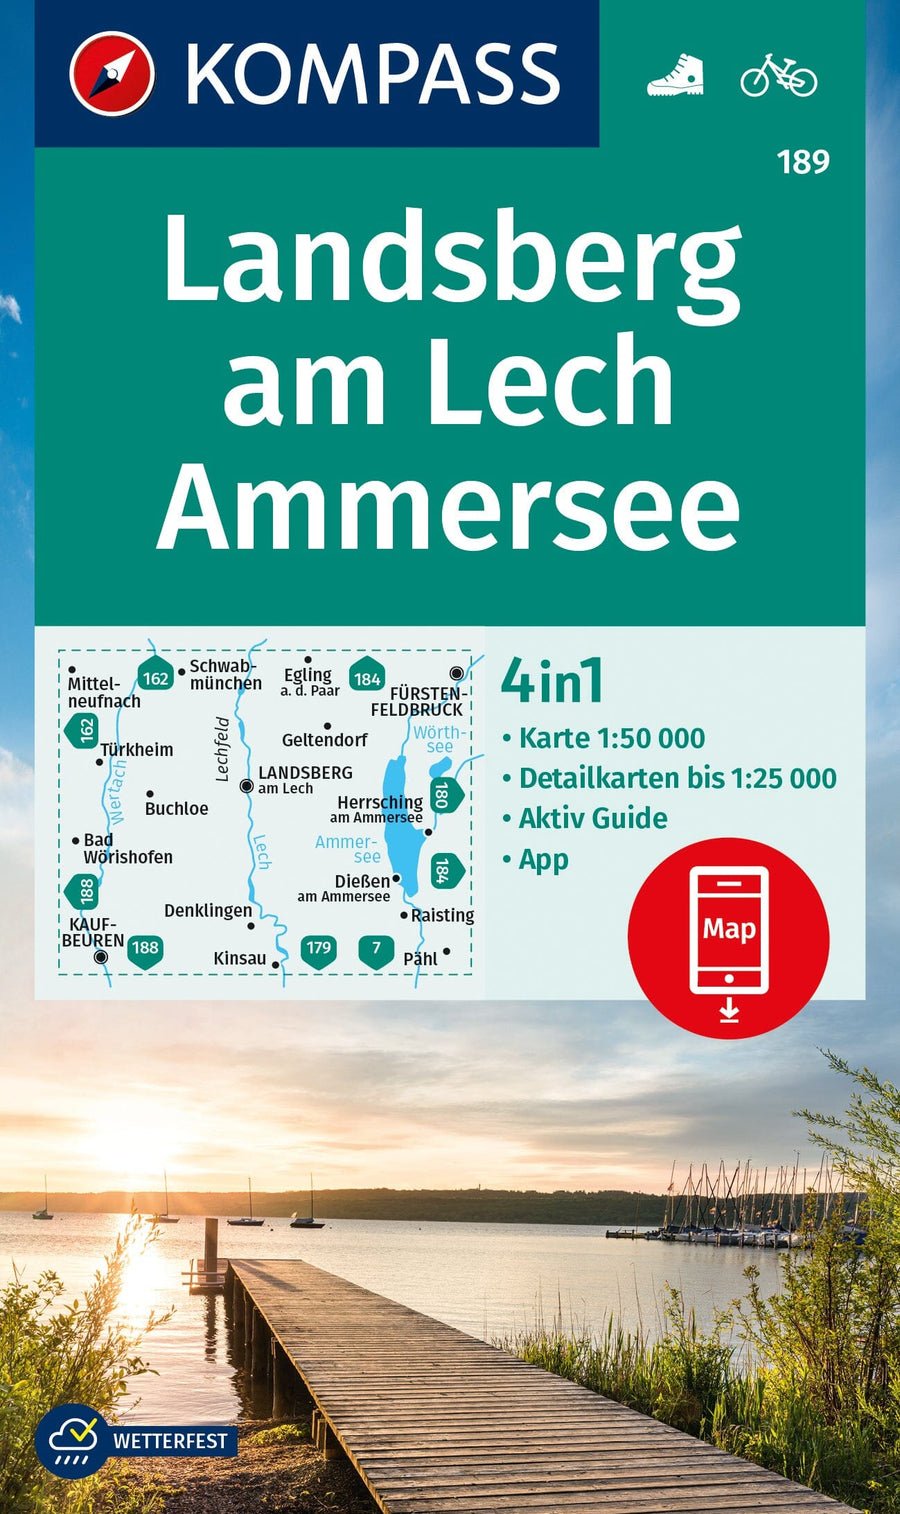 Carte de randonnée n° 189 - Landsberg am Lech, Ammersee (Bavière) | Kompass carte pliée Kompass 